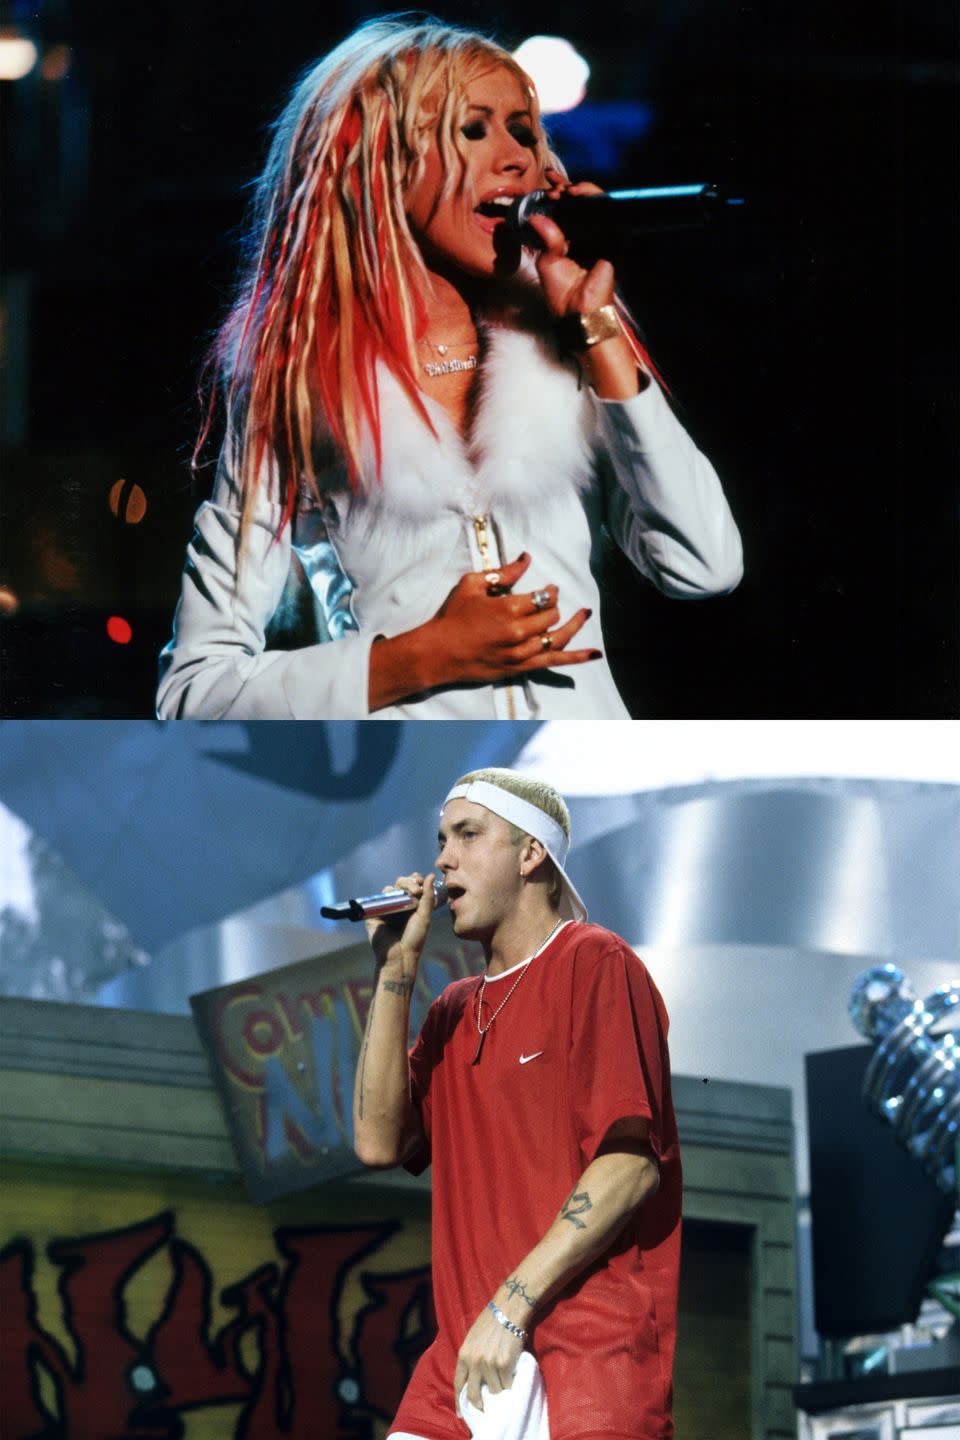 2000: Christina Aguilera vs. Eminem